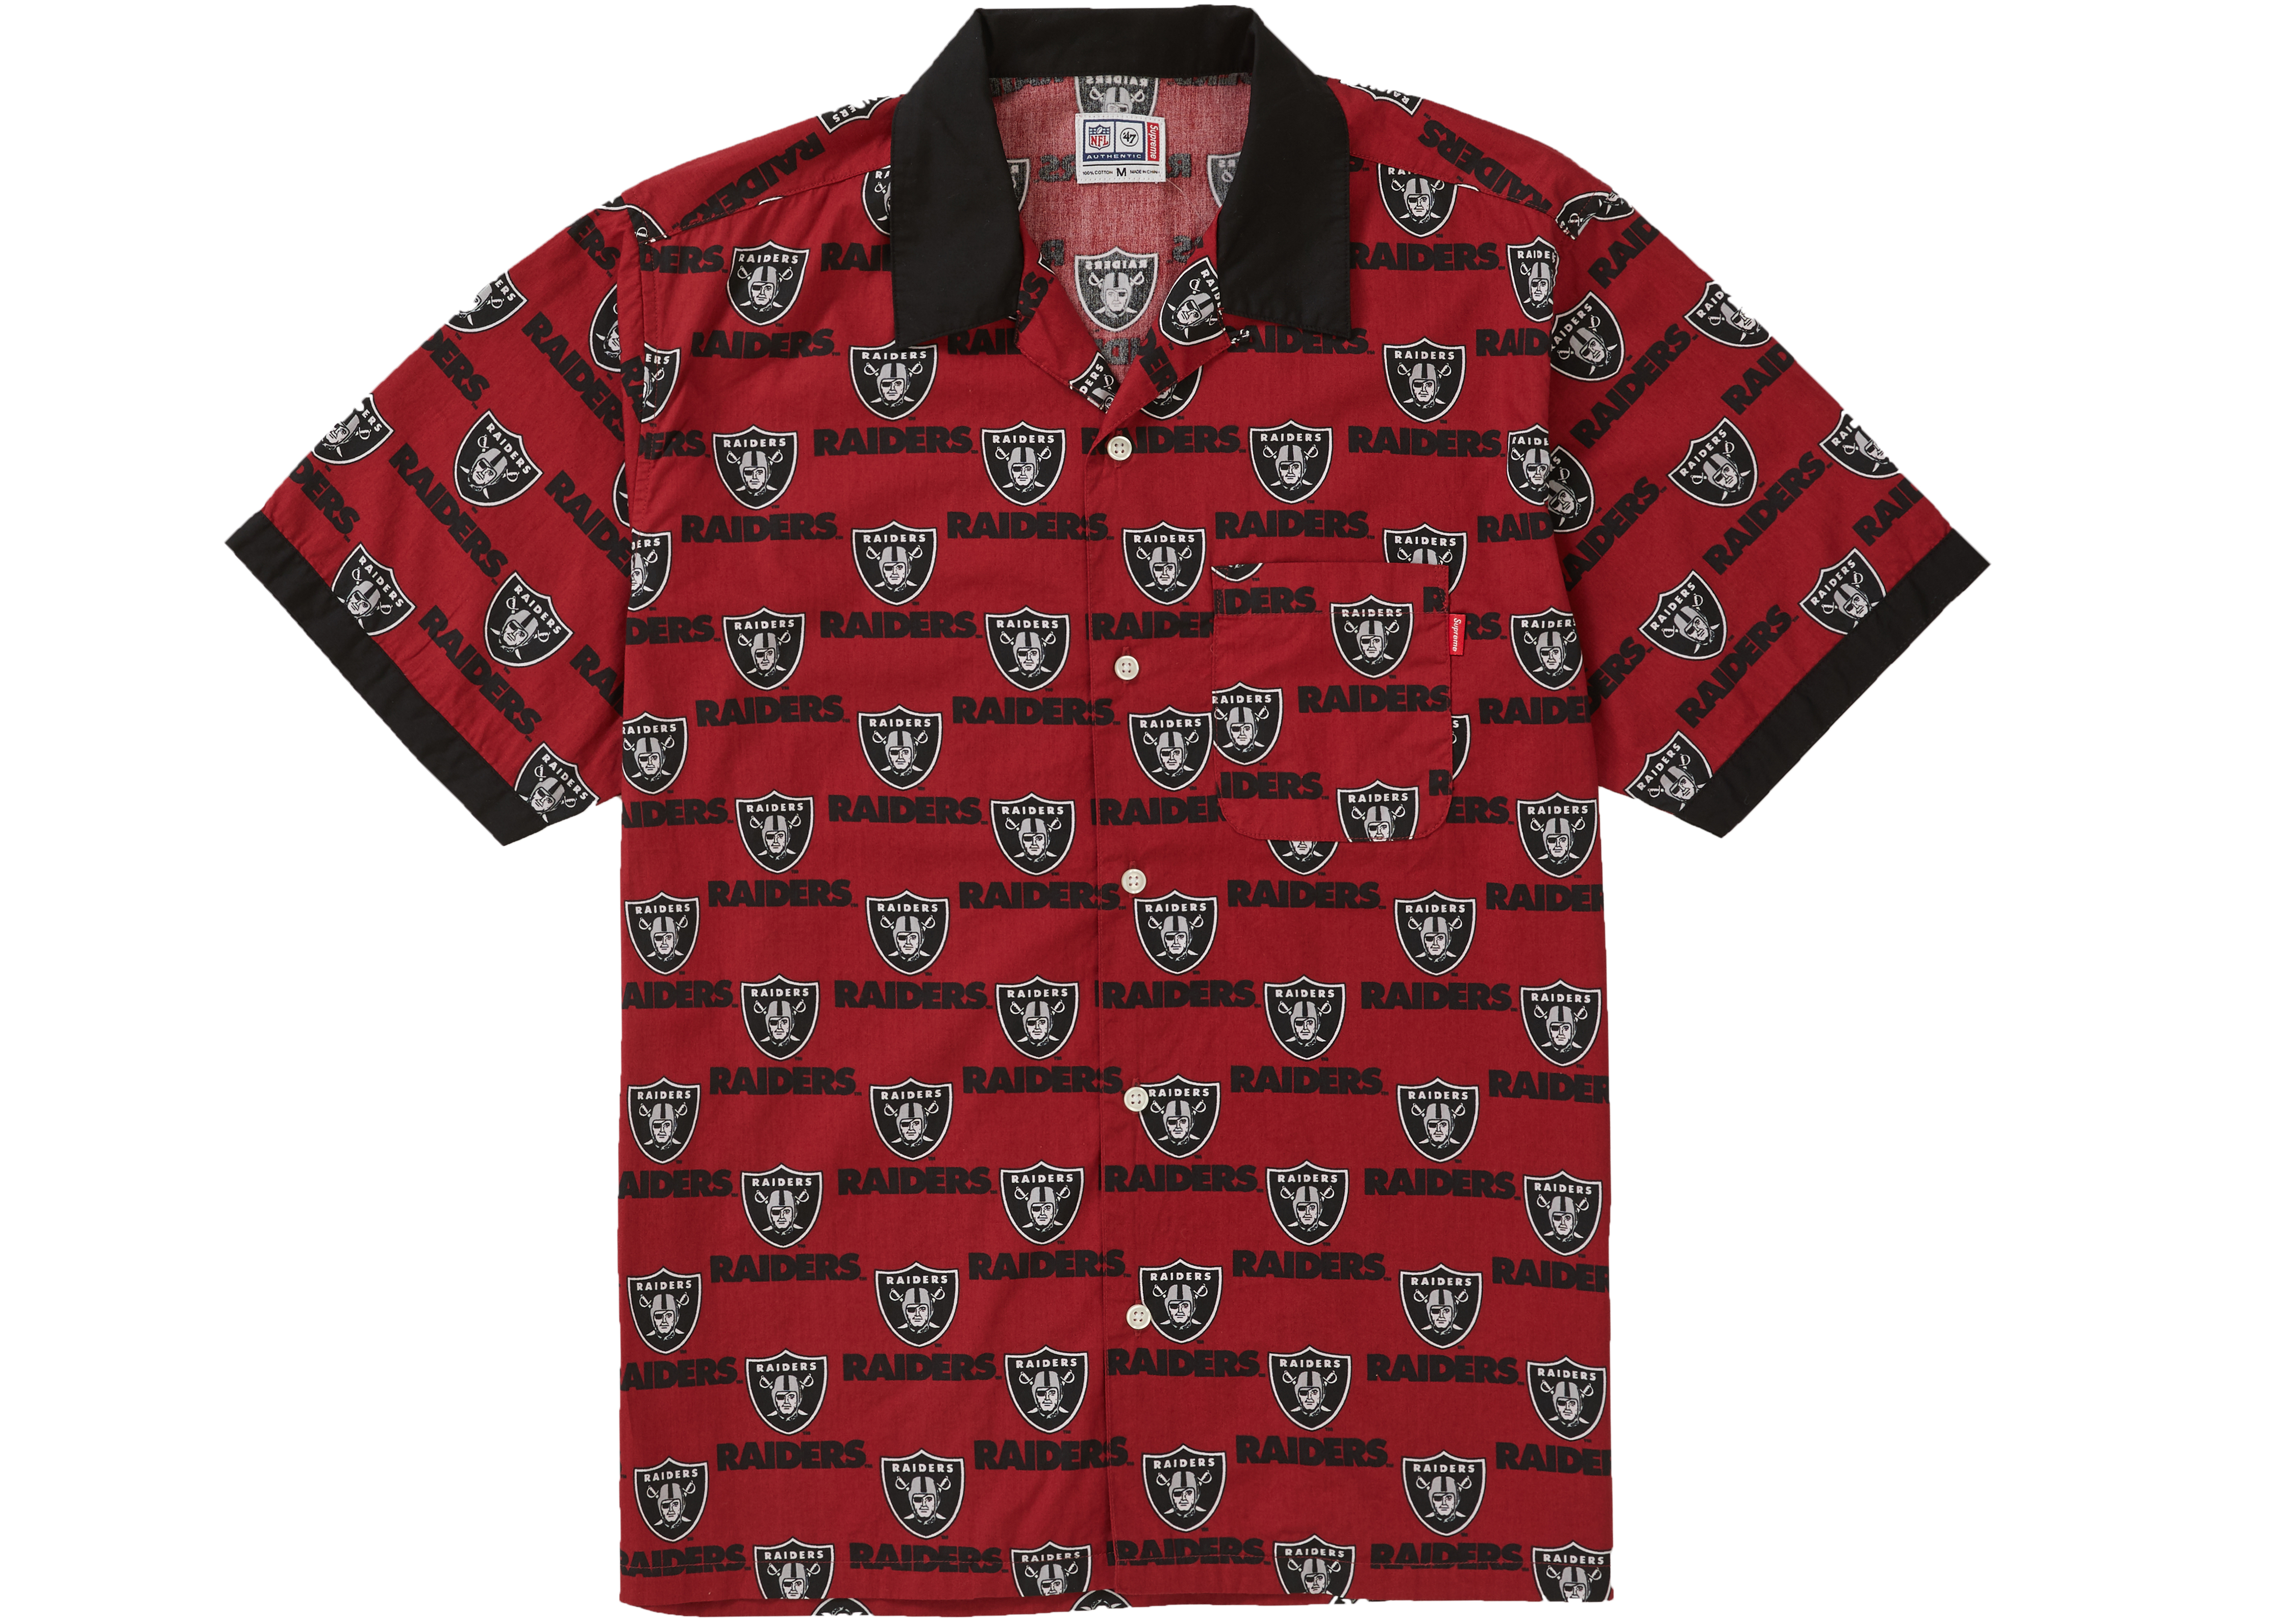 Supreme NFL x Raiders x '47 S/S Shirt Light Burgundy